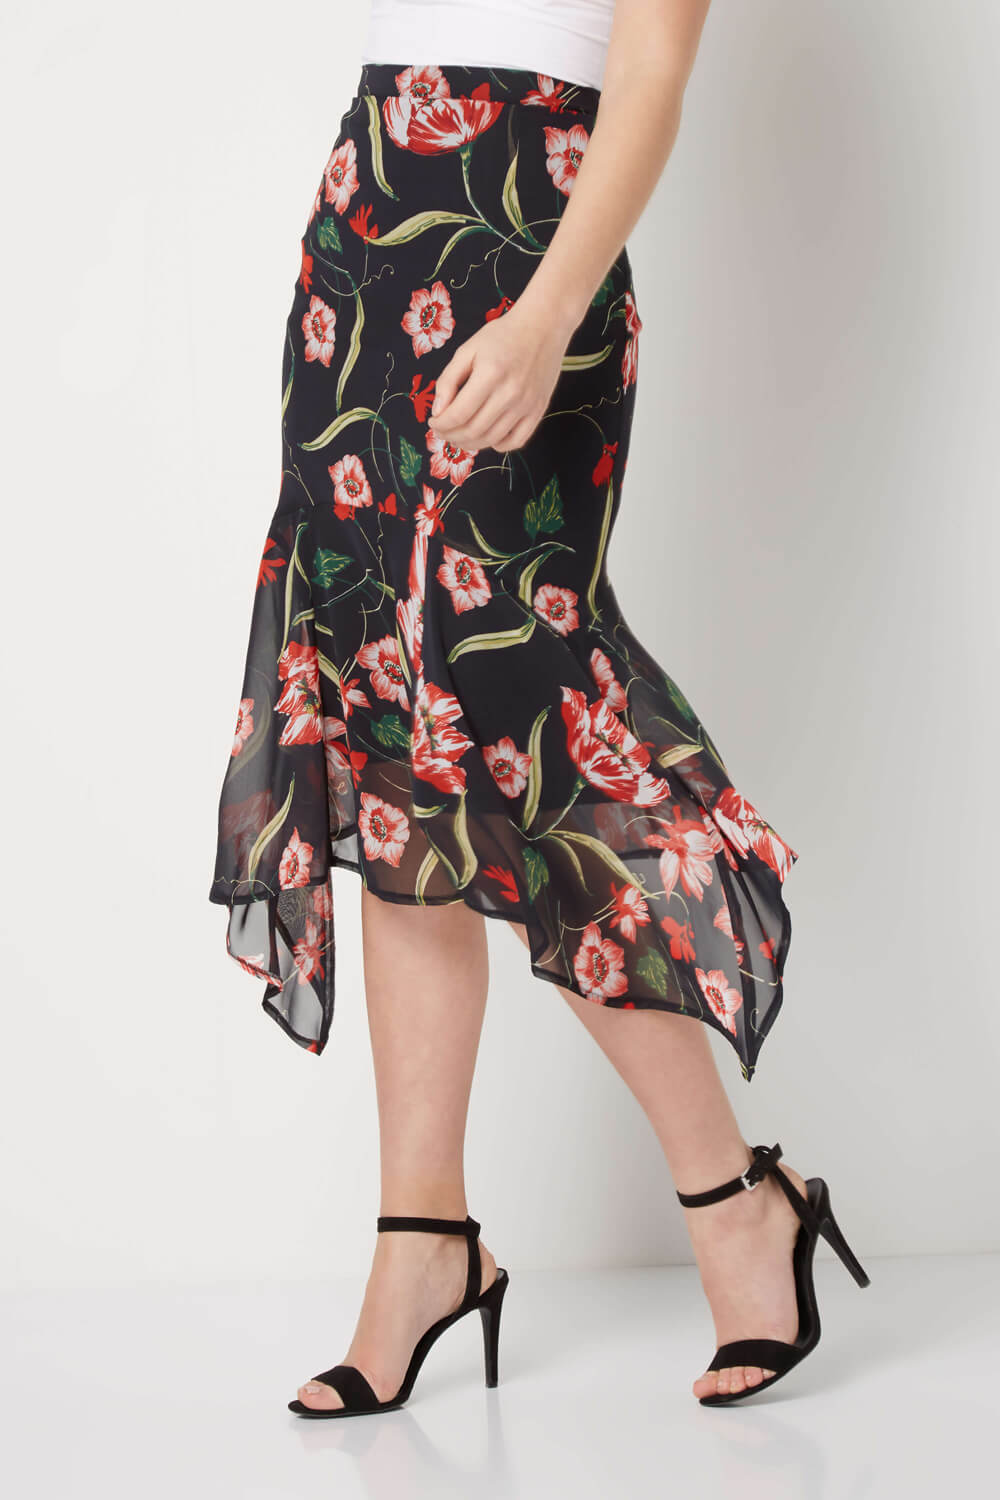 Black Floral Chiffon Skirt, Image 2 of 5